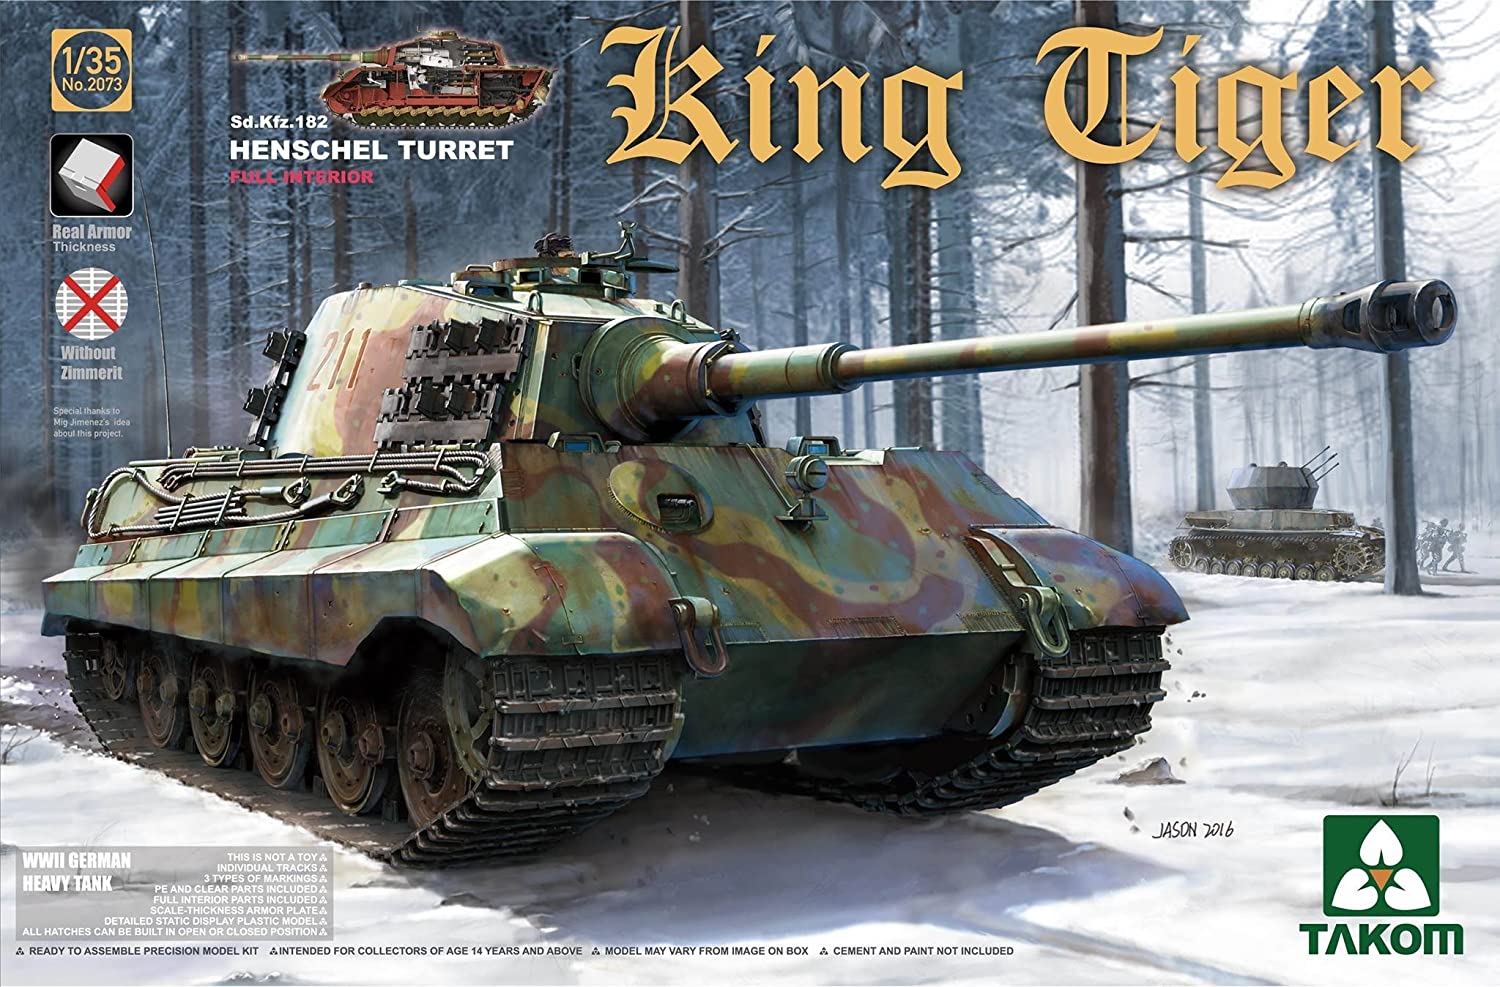 2073  техника и вооружение  King Tiger Sd.Kfz.182 Henschel Turret Full interior  (1:35)